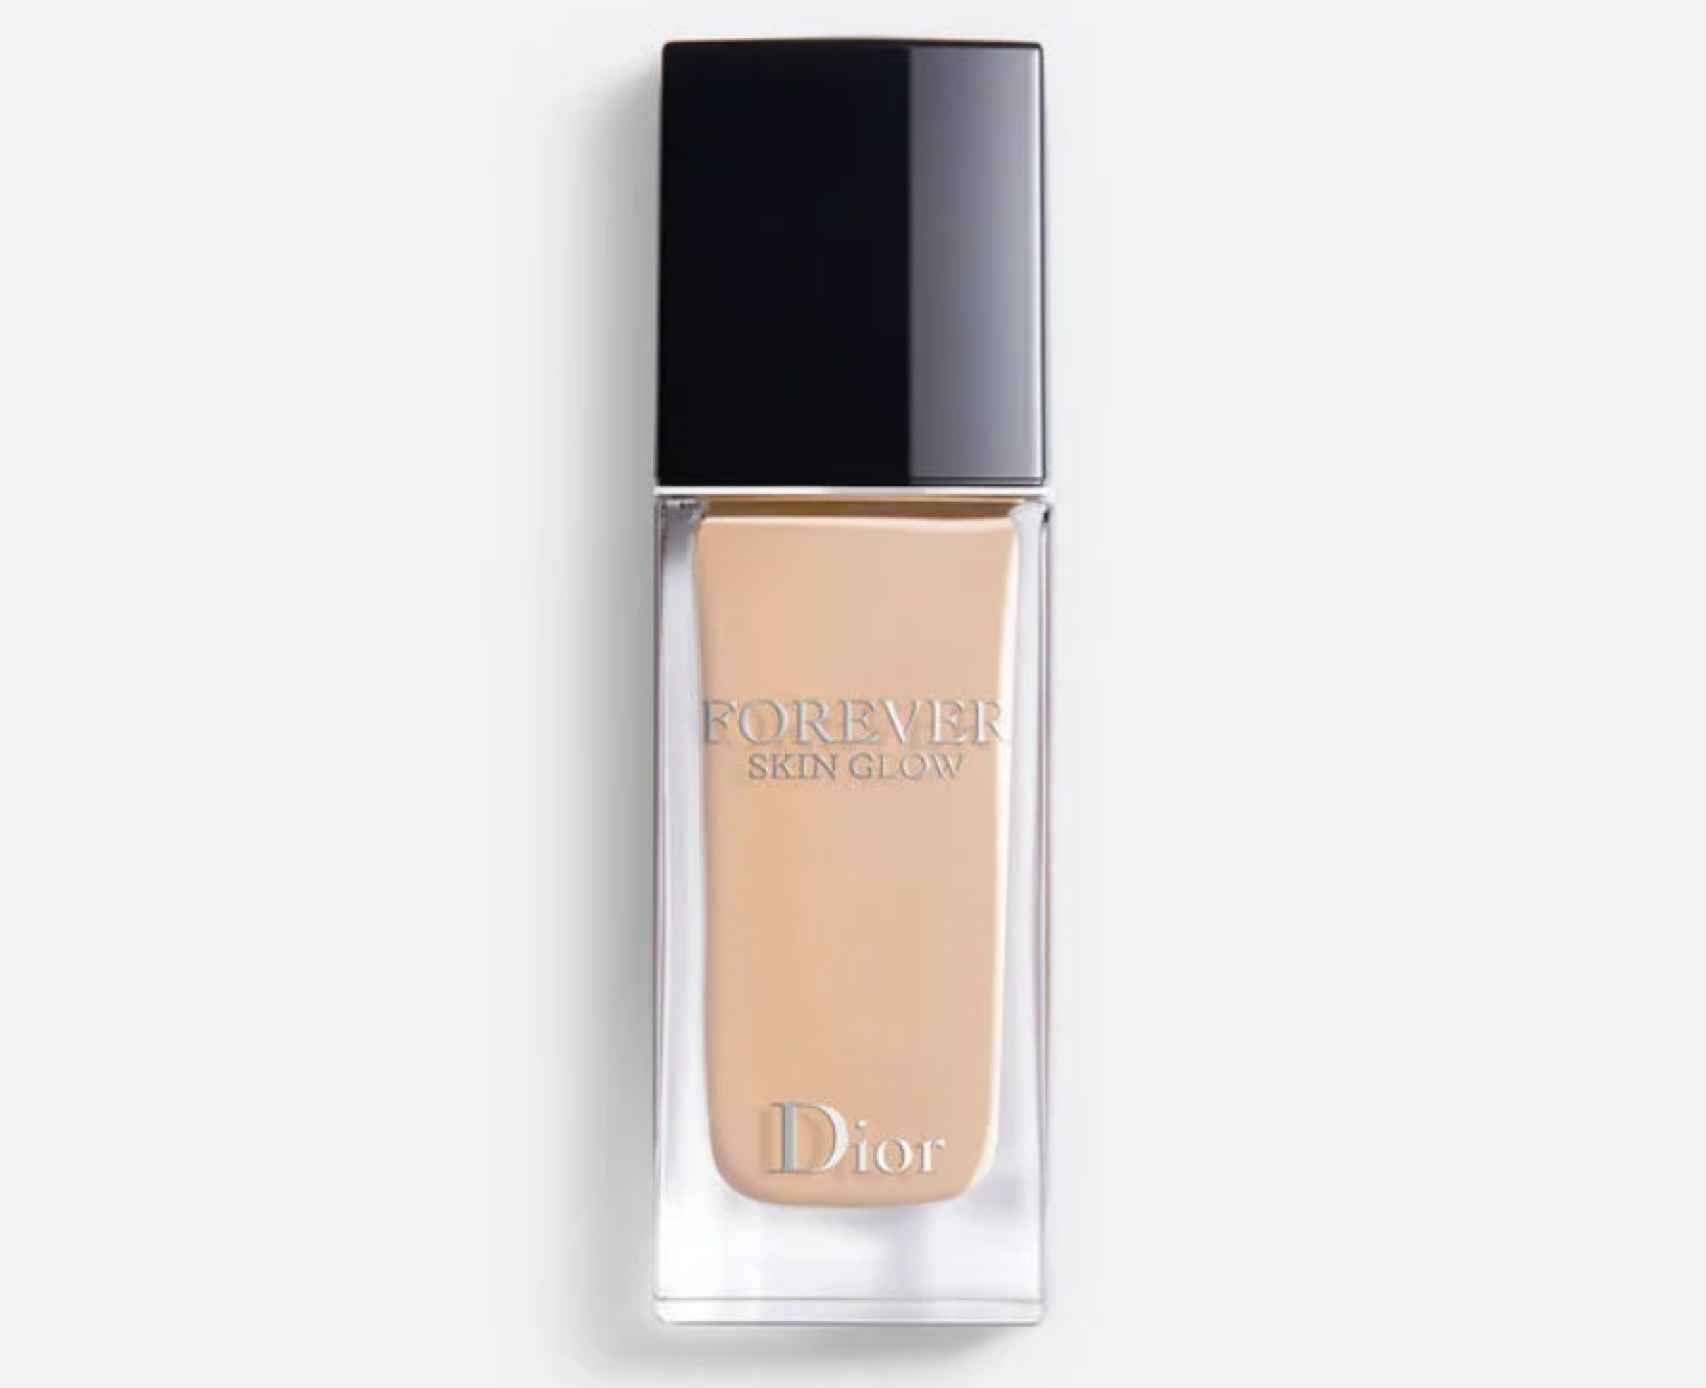 Forever skin glow de Dior.